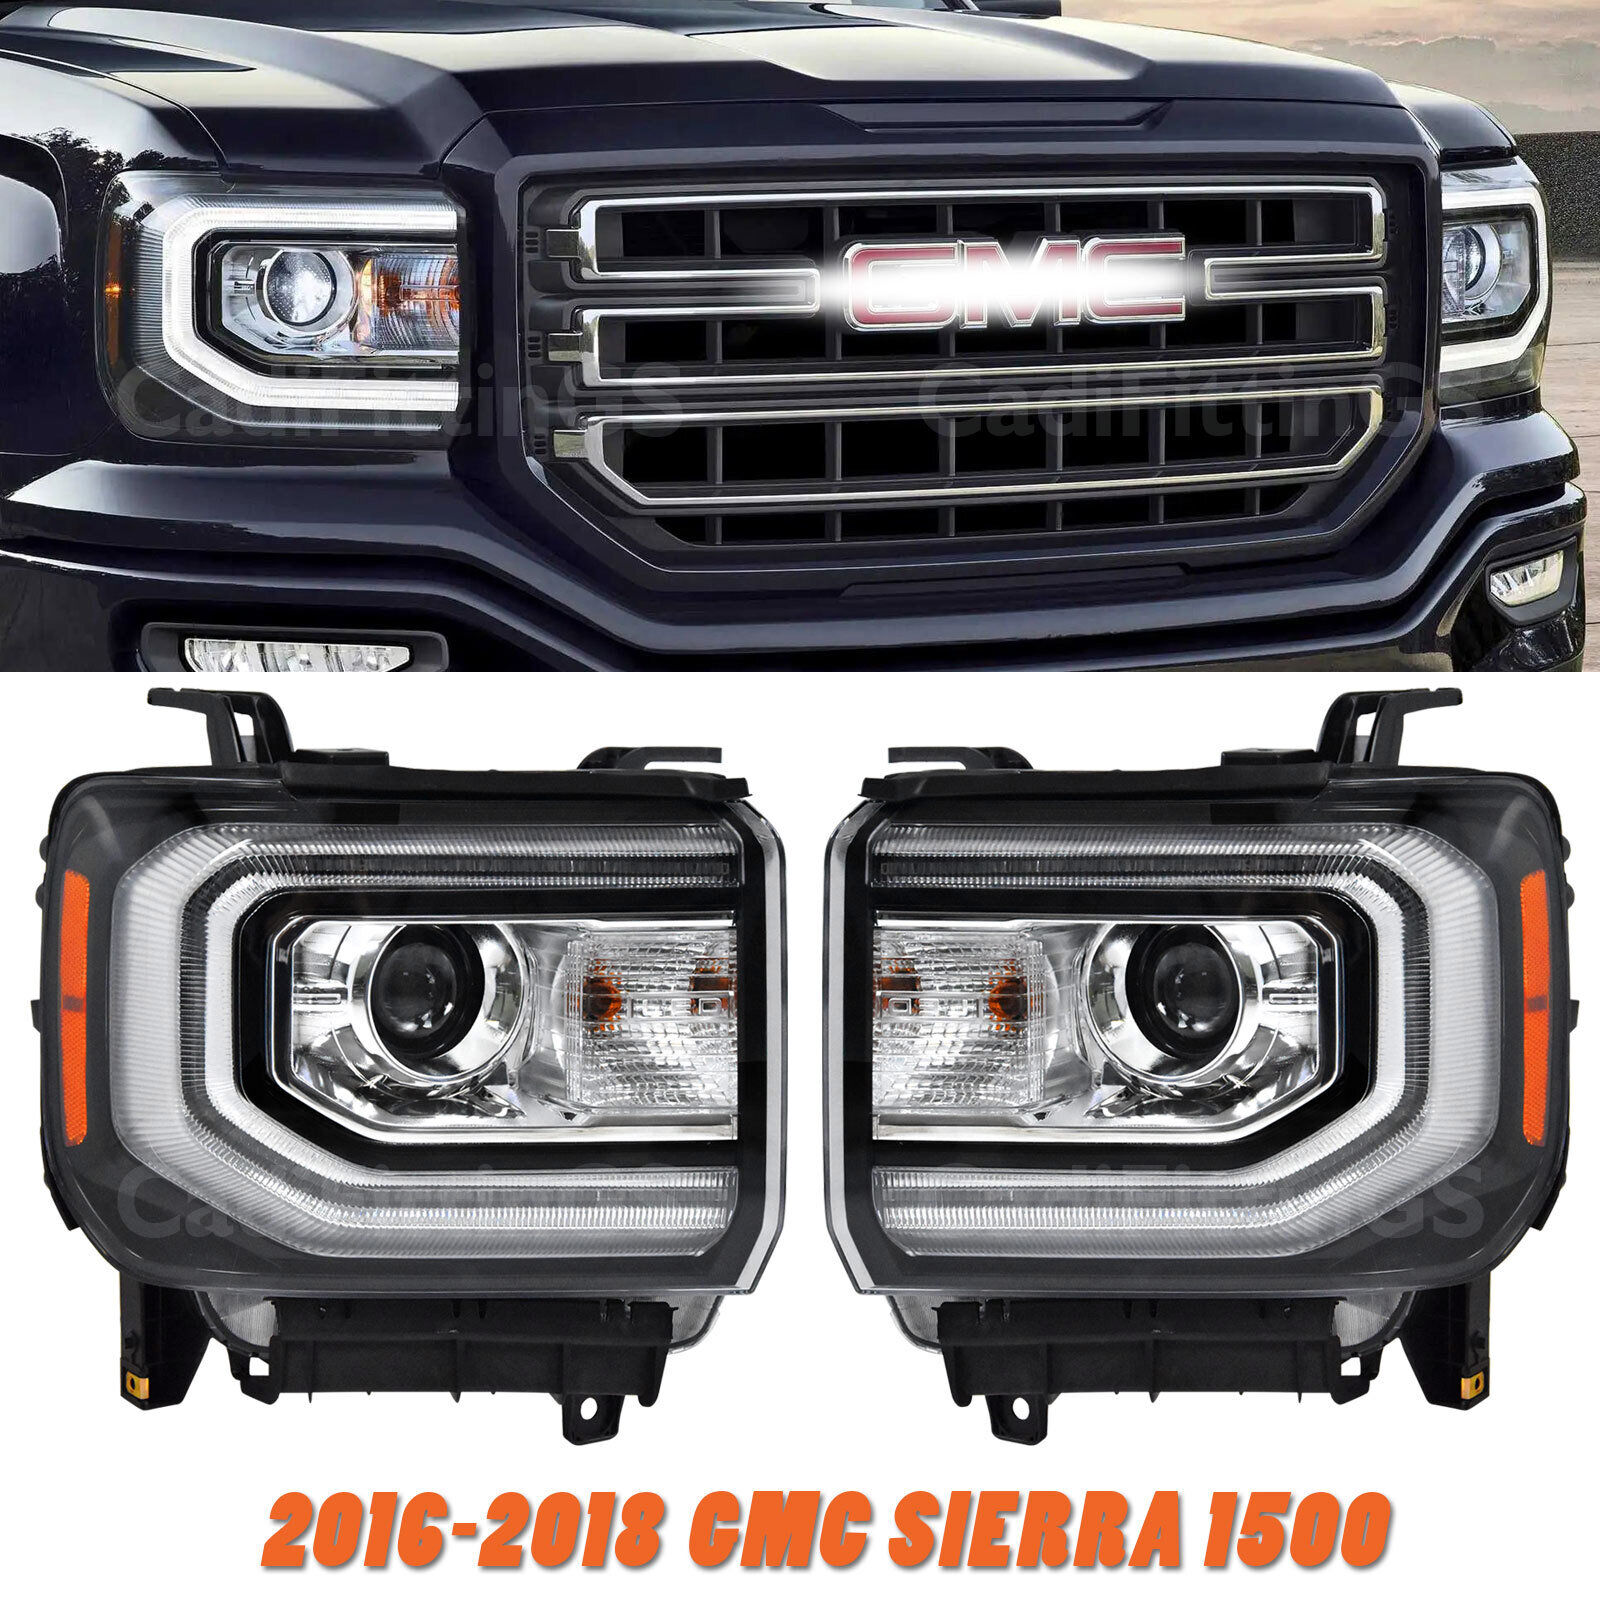 2016-2018 GMC Sierra 1500 HID/Xenon Type LED DRL Projector Headlights Headlamps